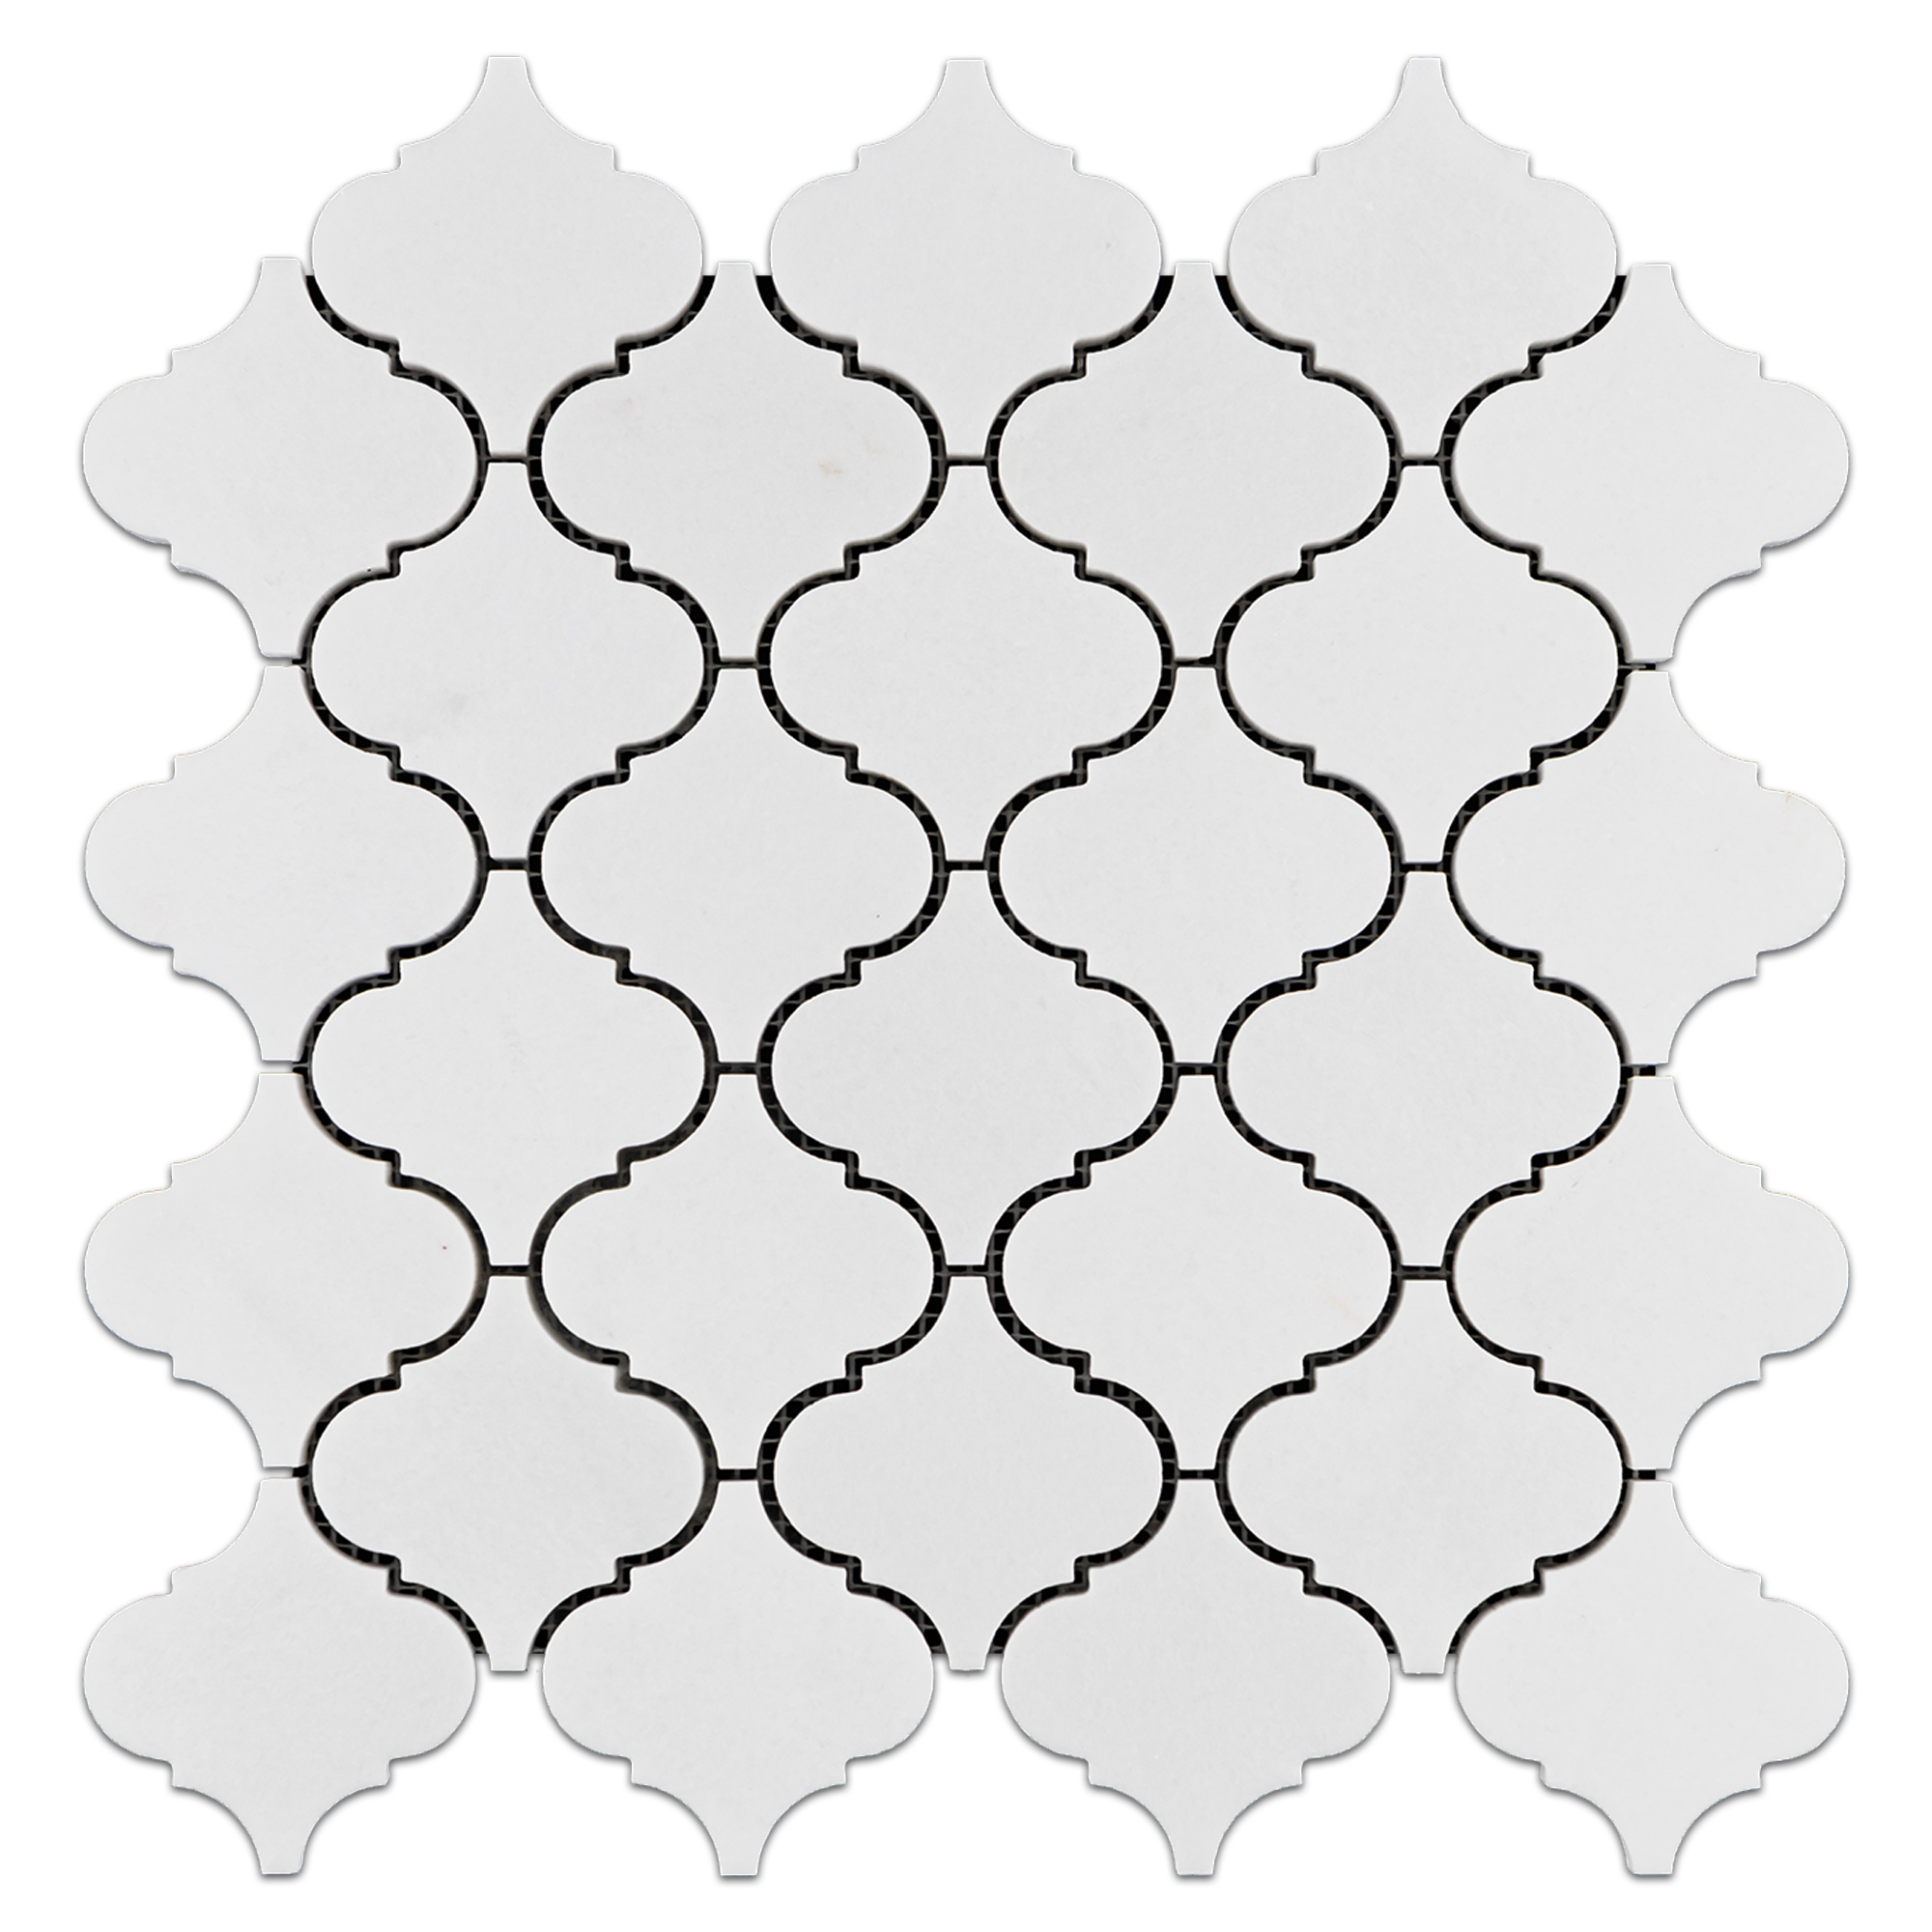 Elon White Thassos Marble 3 Lantern Field Mosaic 12x12 0625x0 375 Polished AM1146P Surface Group International Product